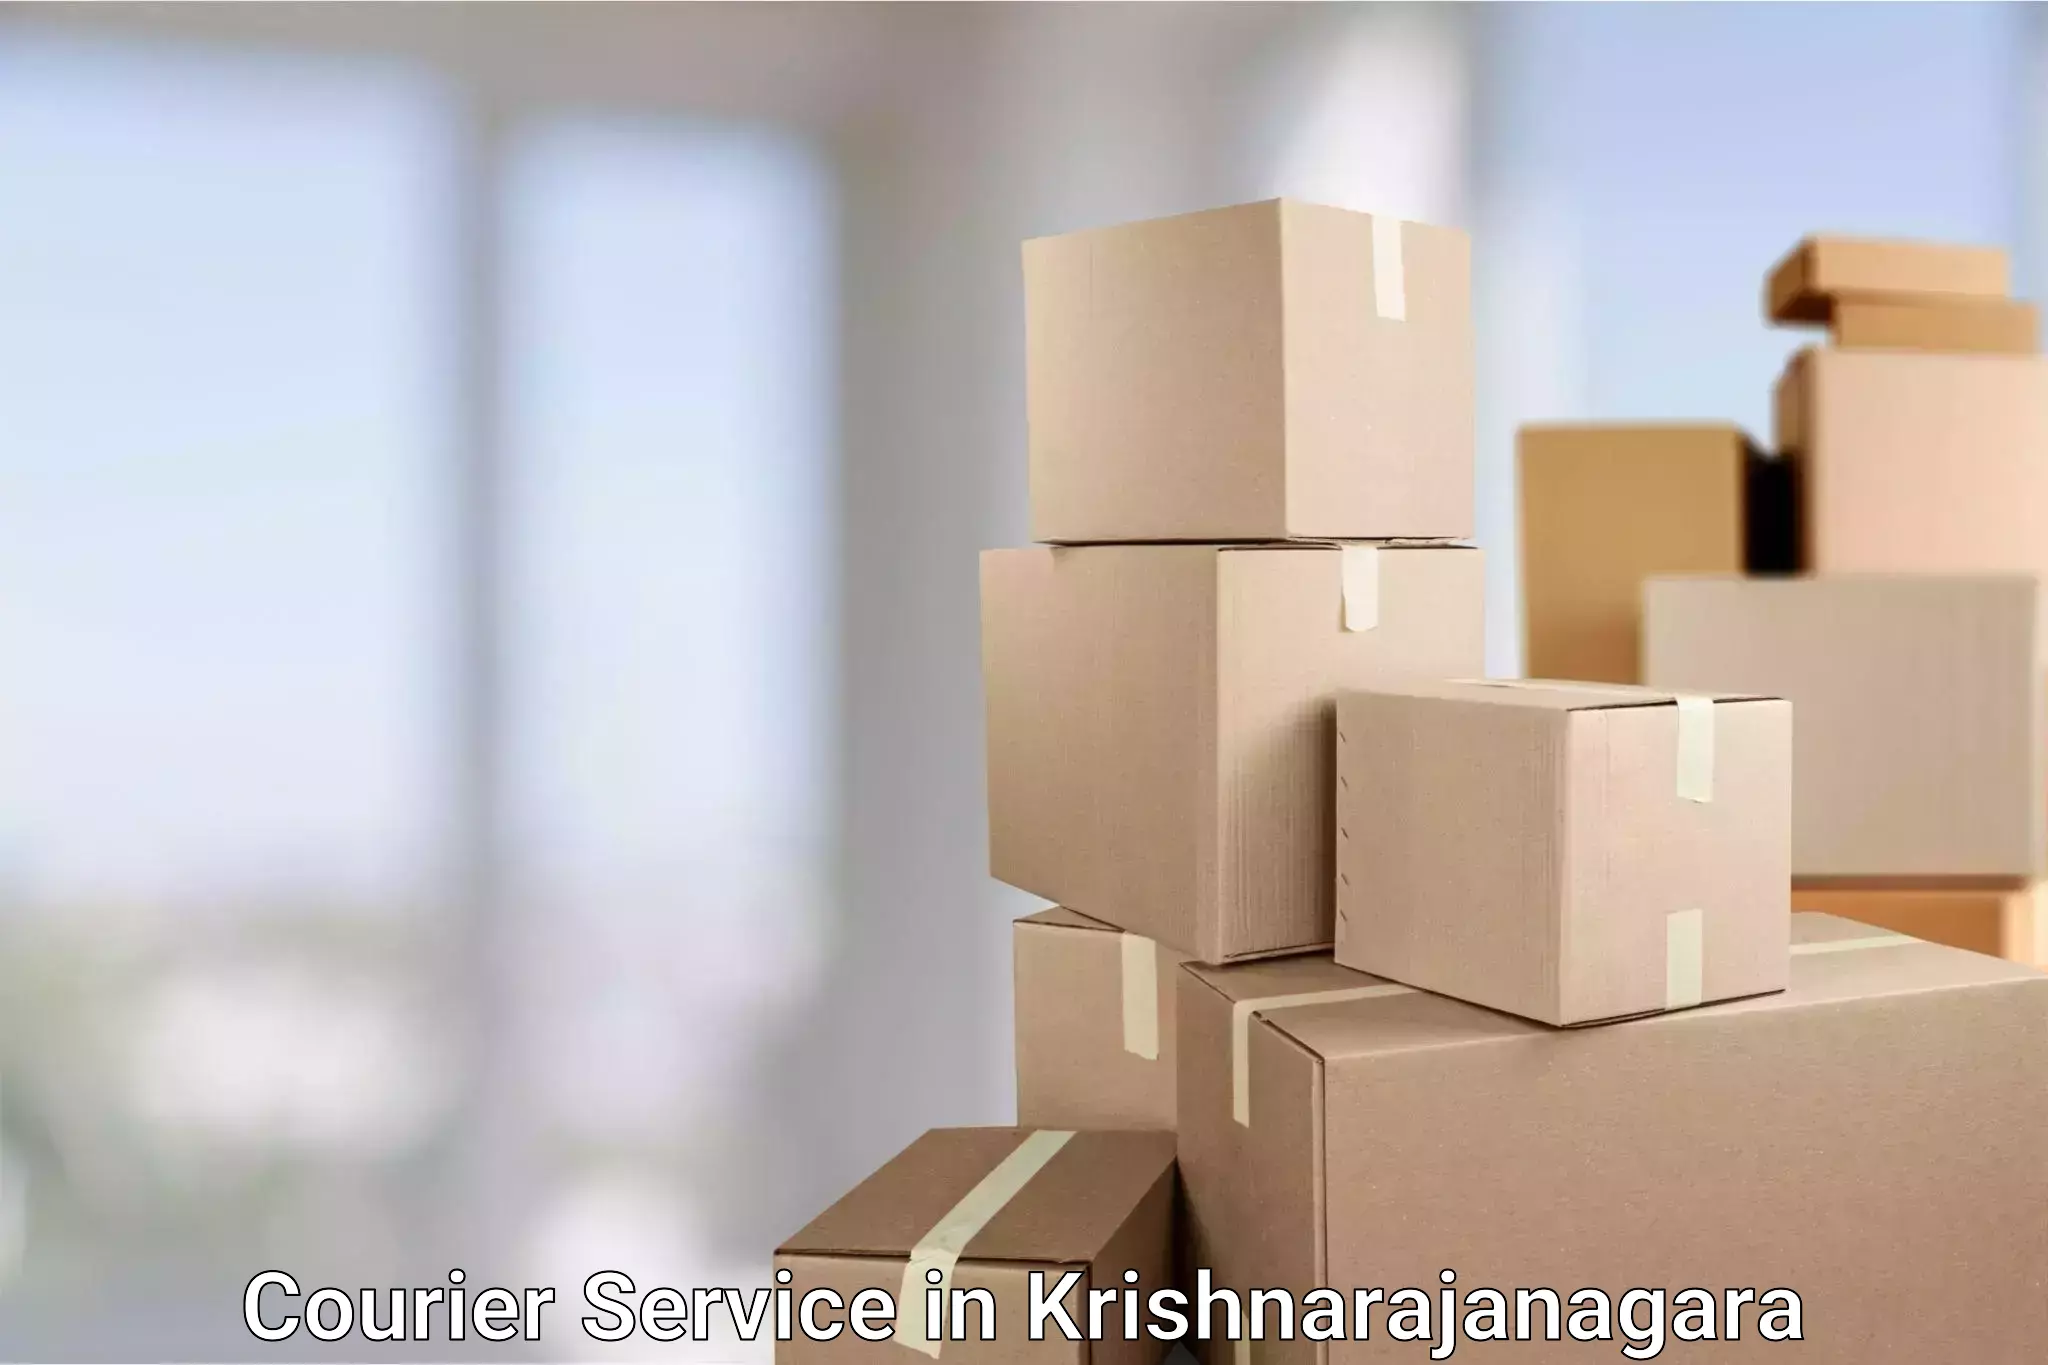 Supply chain delivery in Krishnarajanagara